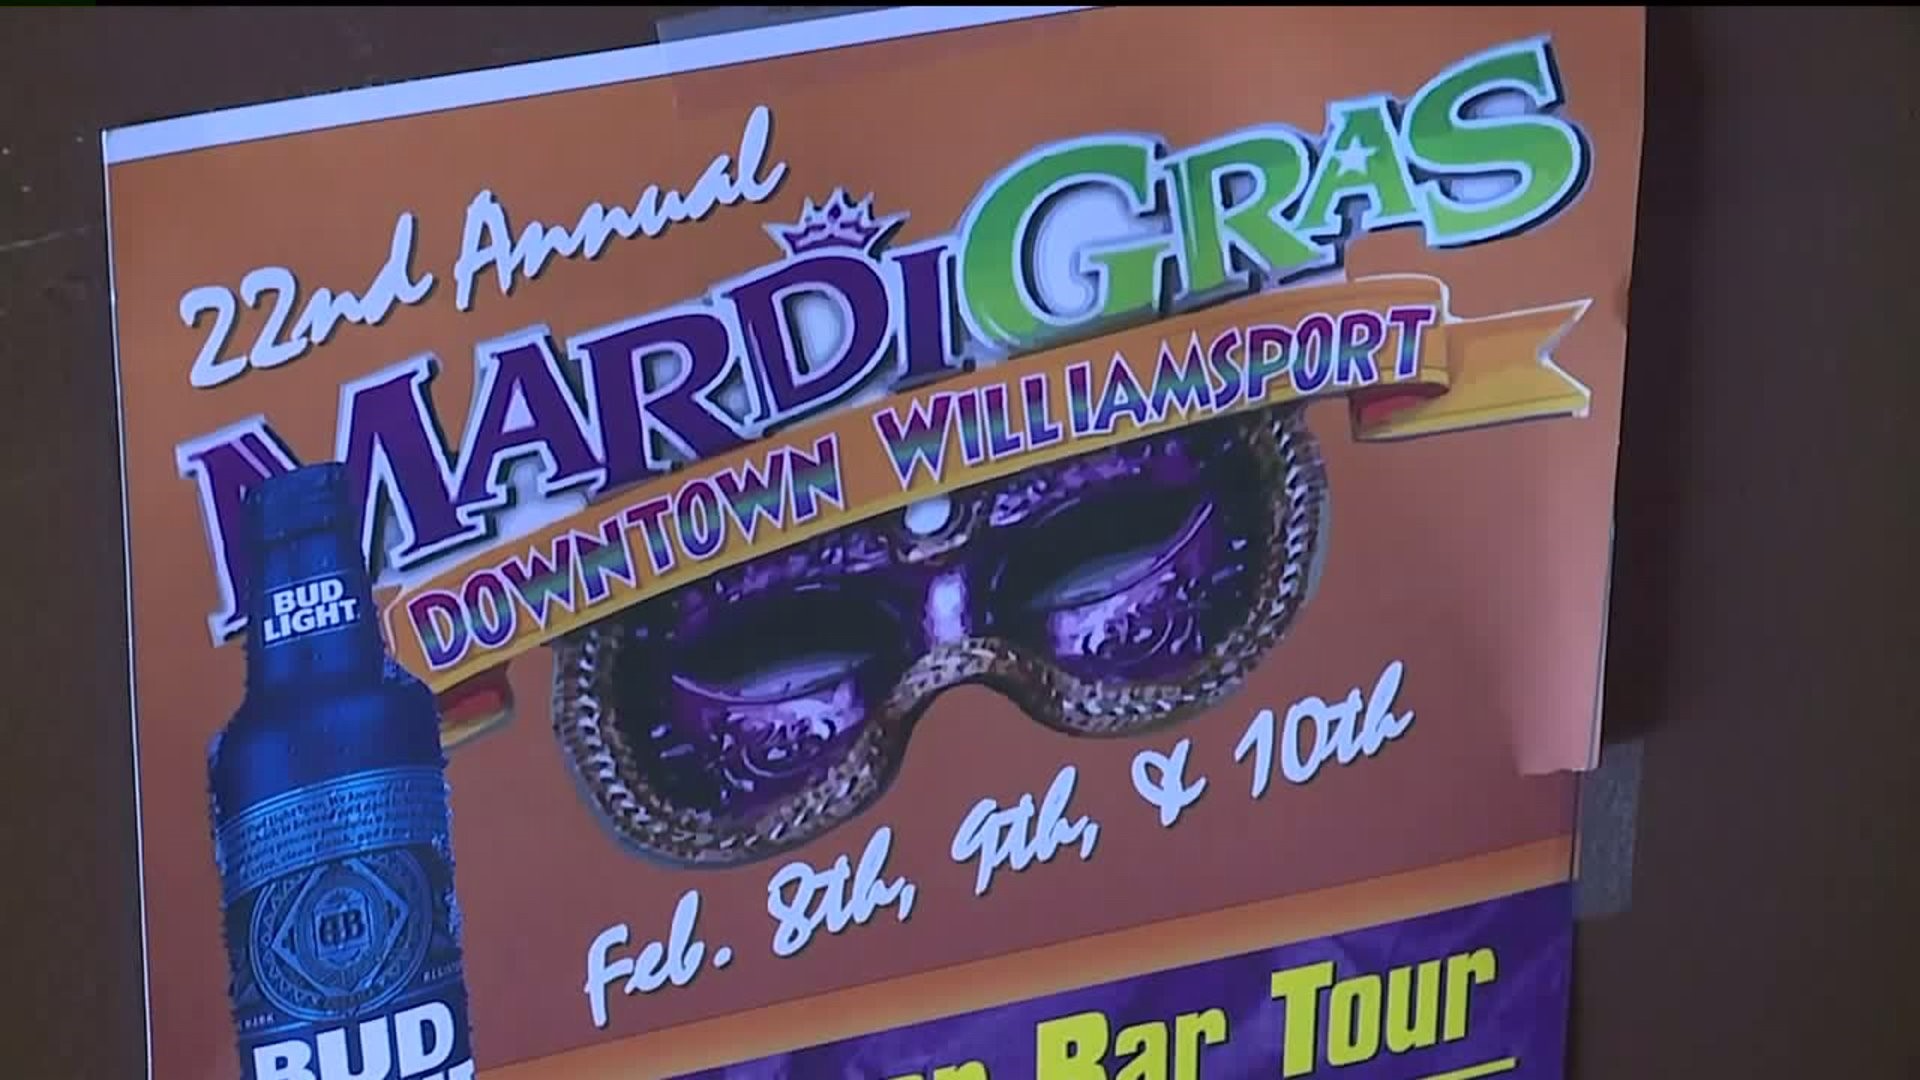 Ready for Mardi Gras in Williamsport